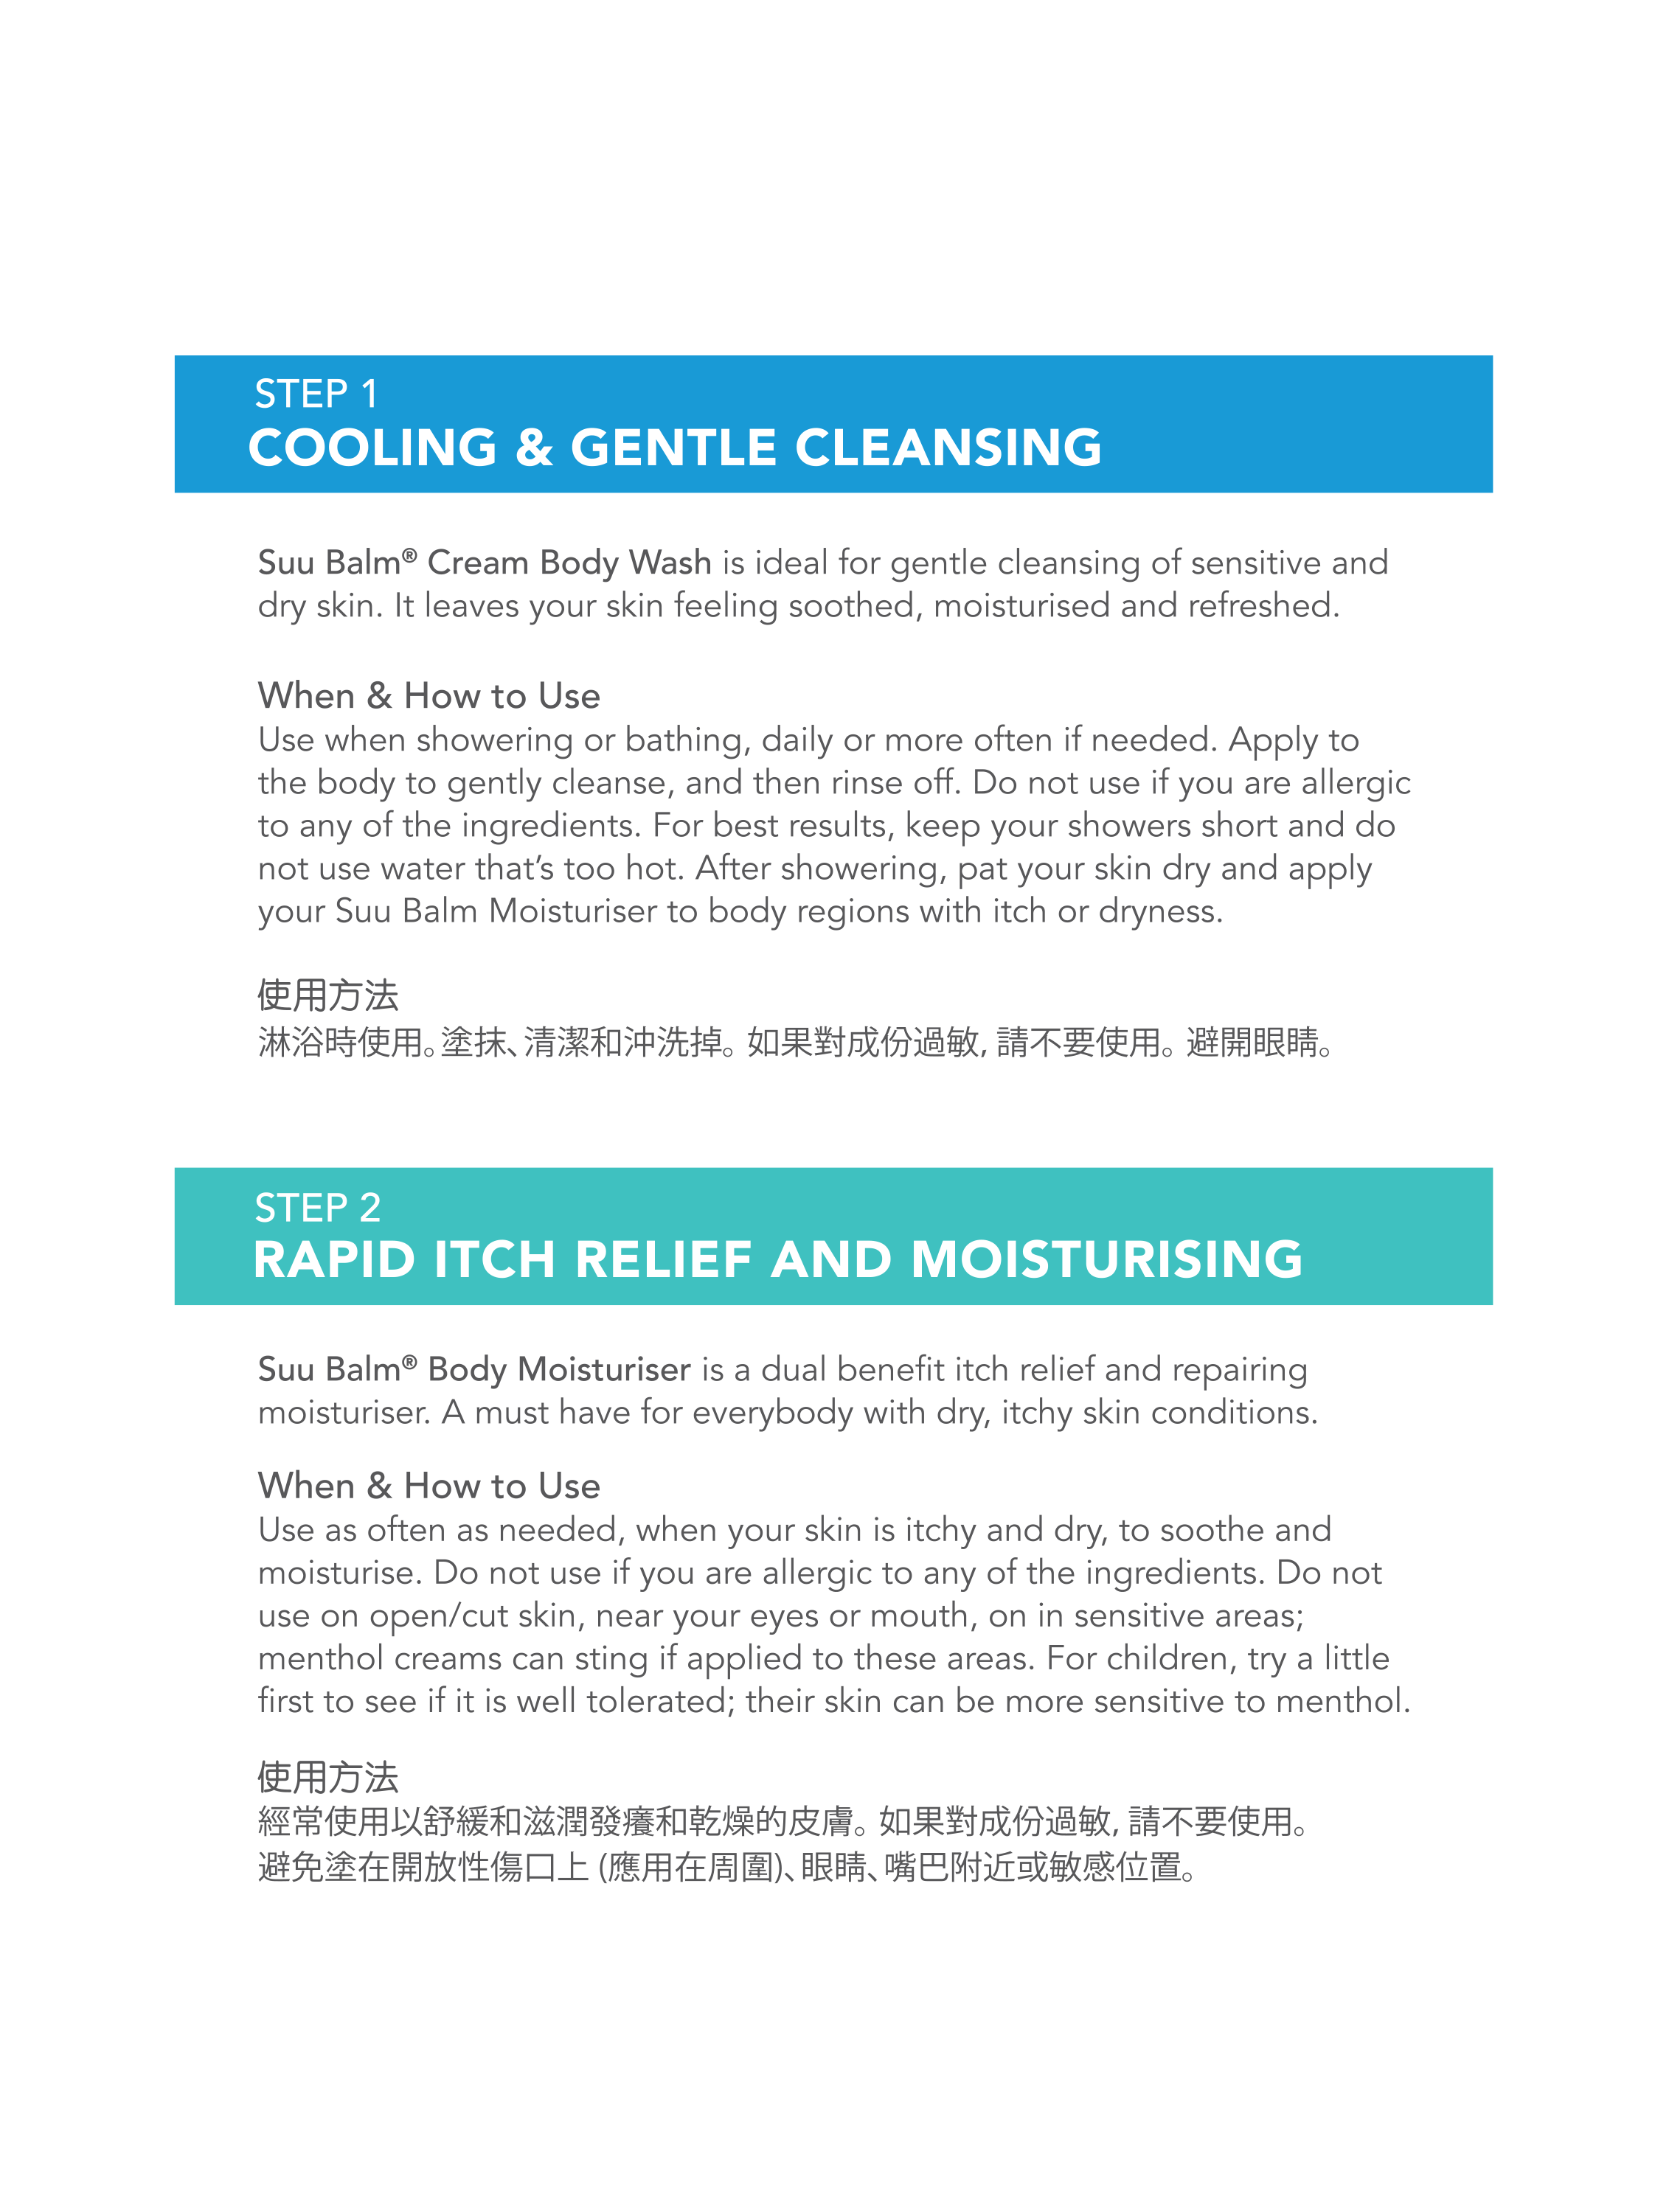 Suu Balm® Rapid Itch Relief Starter Kit